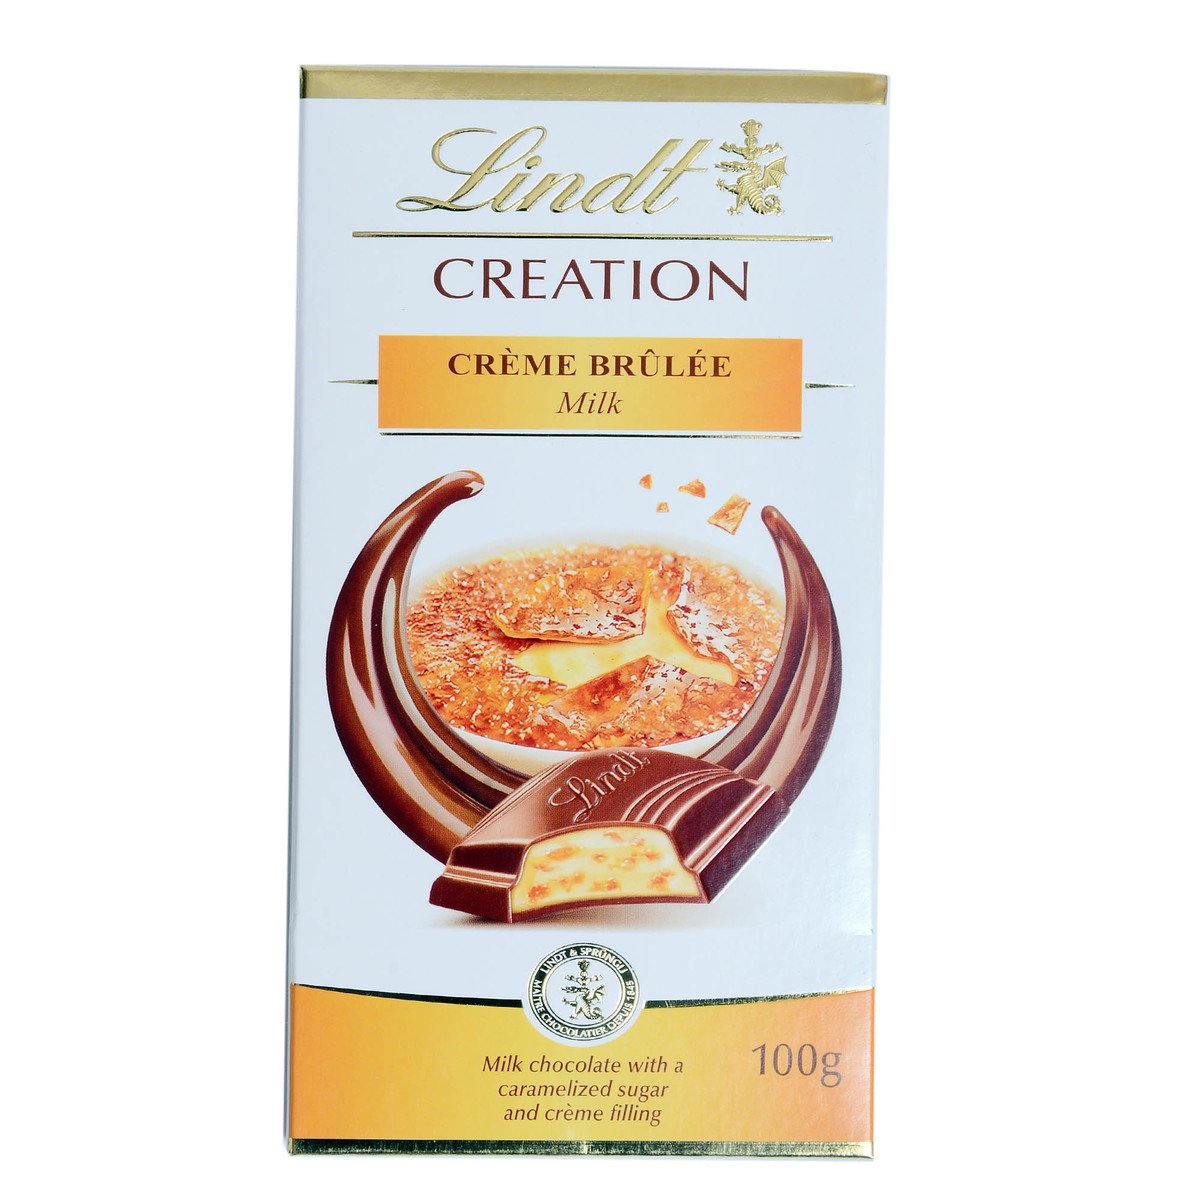 Lindt Creation Creme Brulee Milk Chocolate 100g